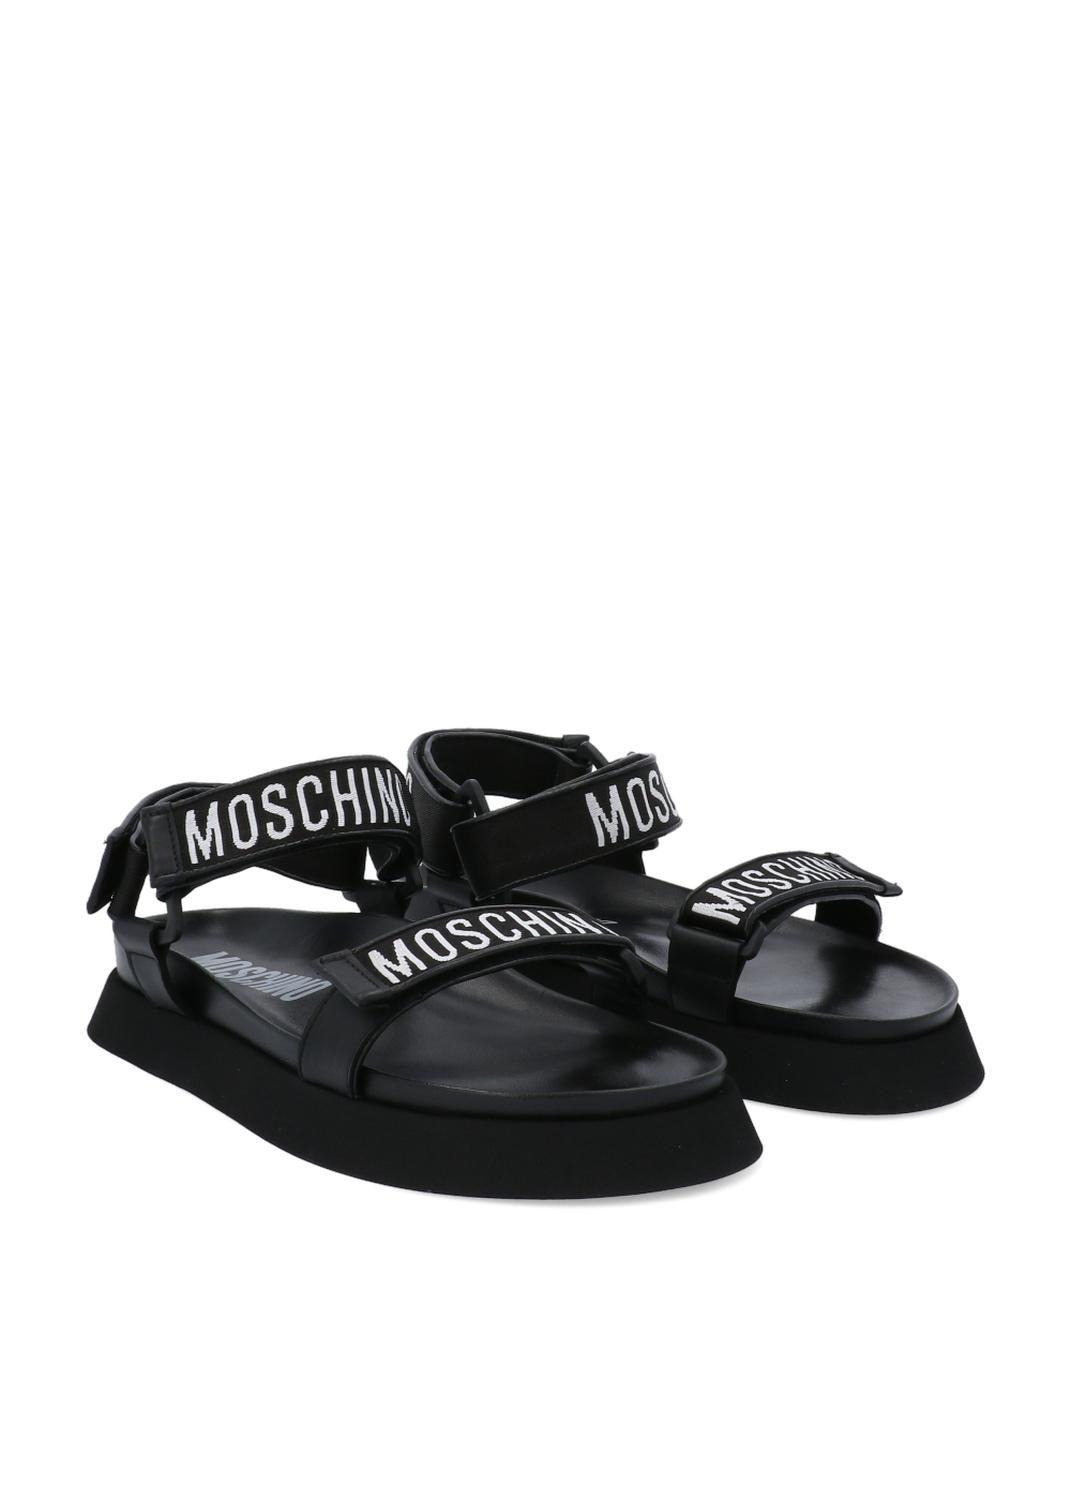 Moschino sandalias con correas bordadas MSC-MB16024